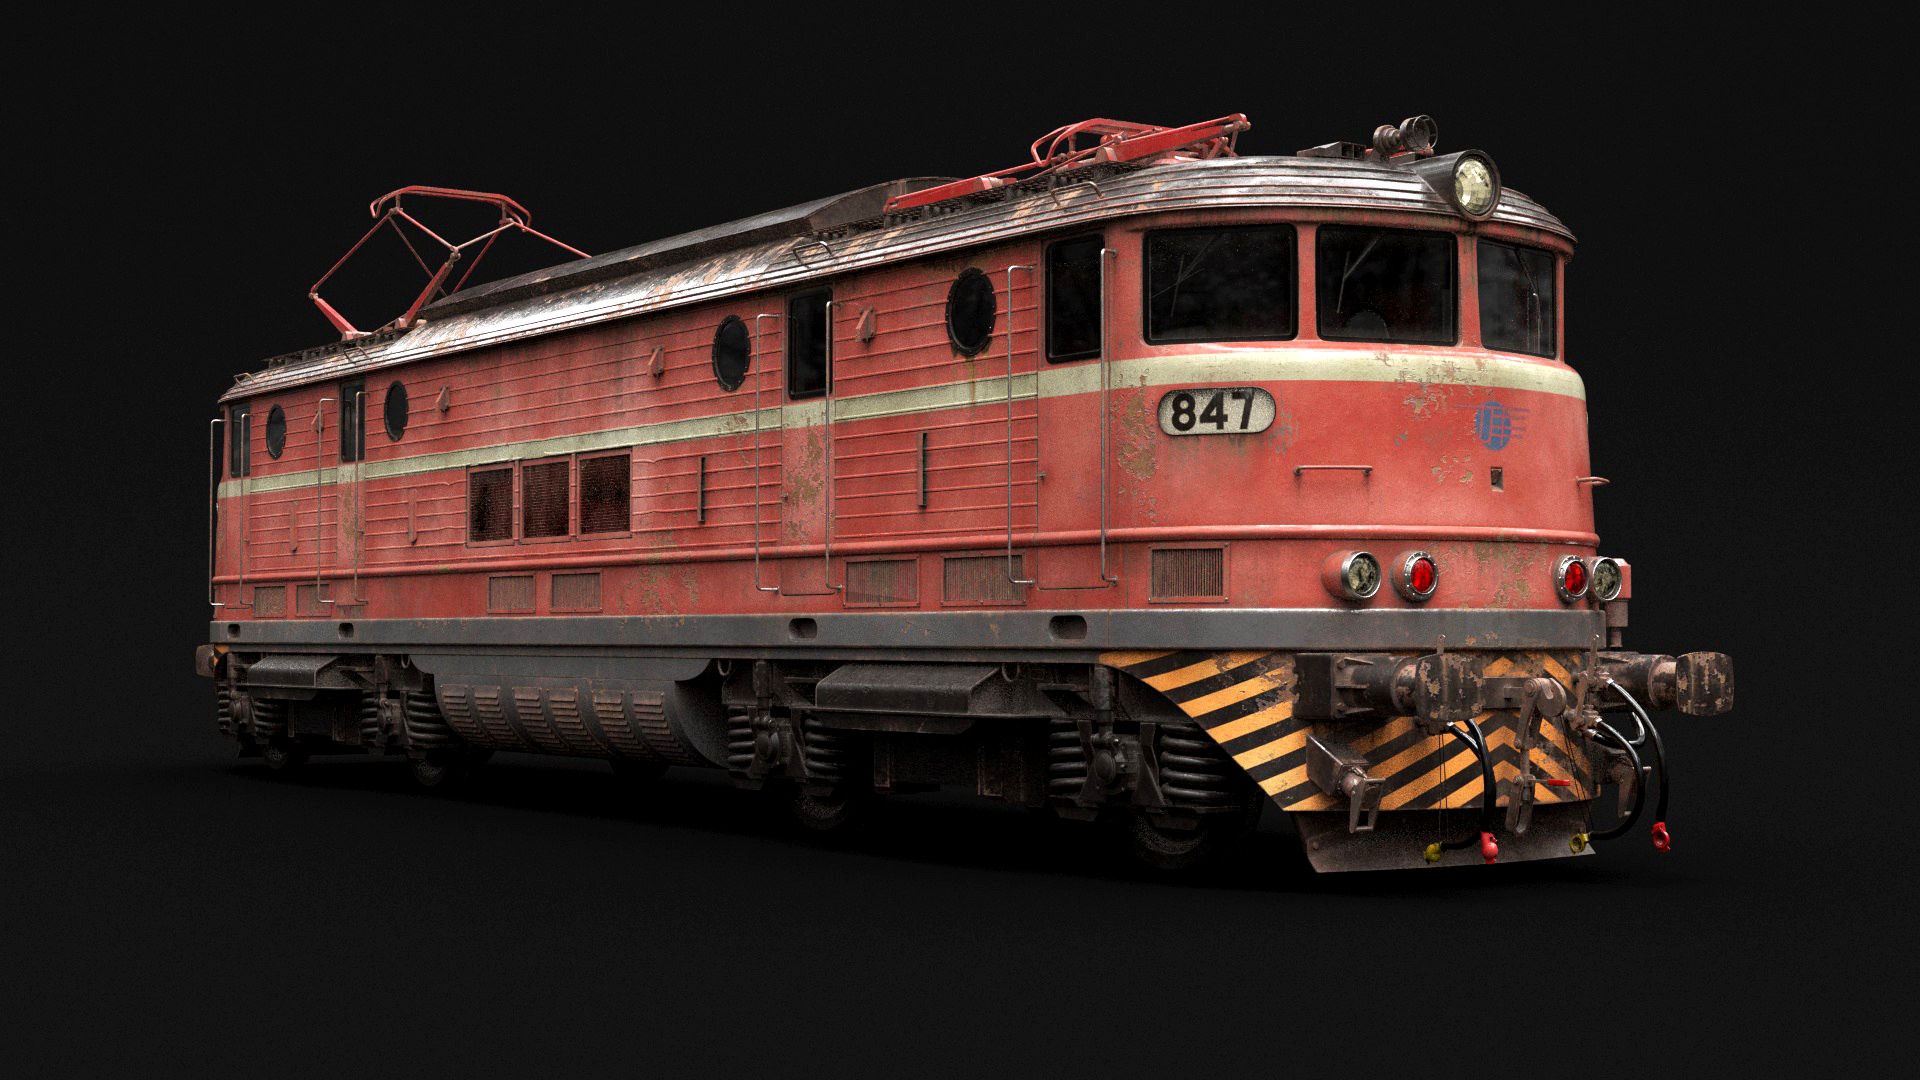 old locomotive train